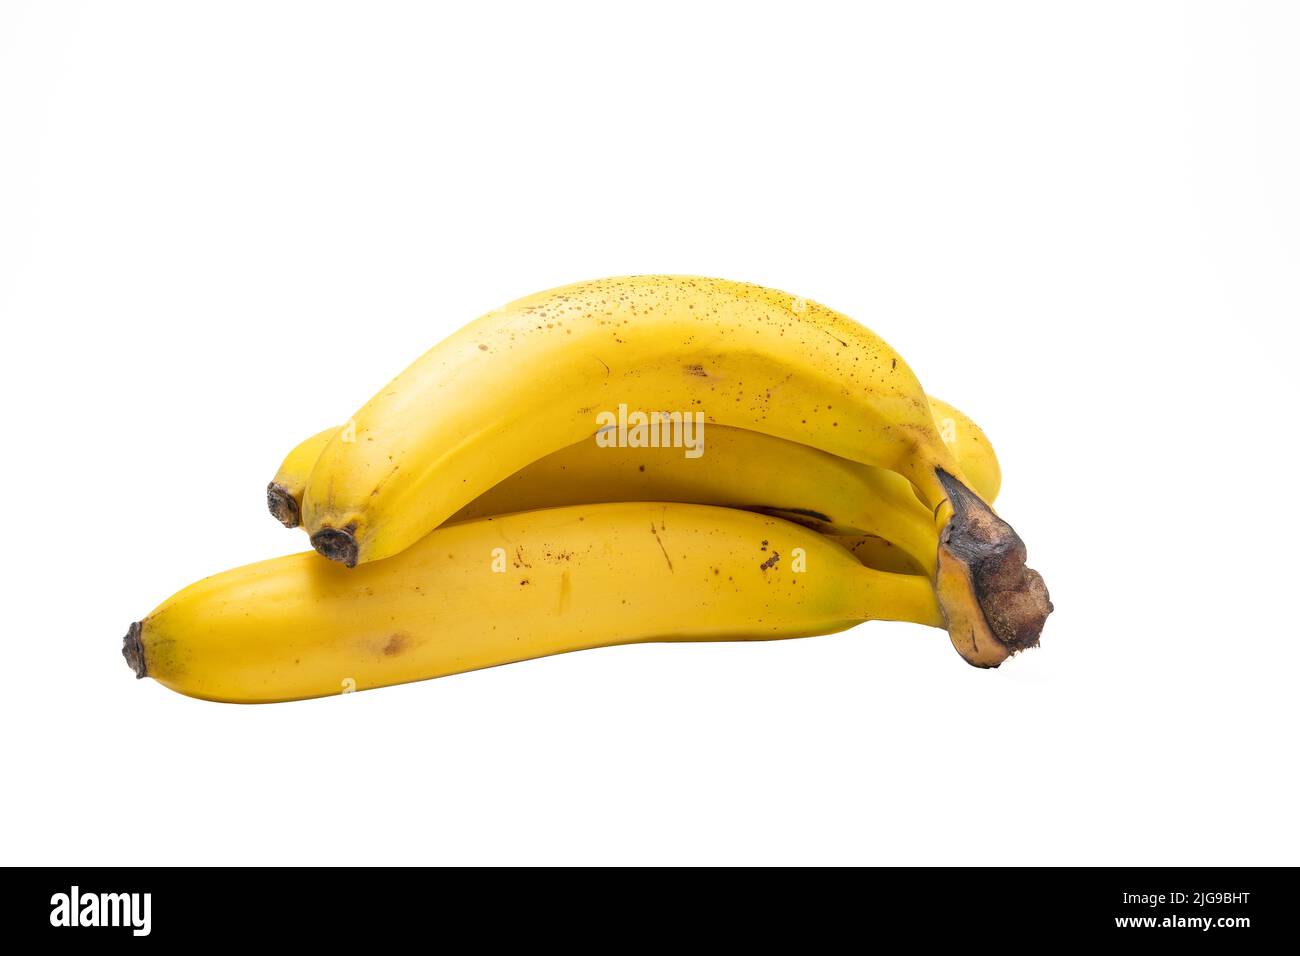 Yellow Bananas against white background Stock Photo